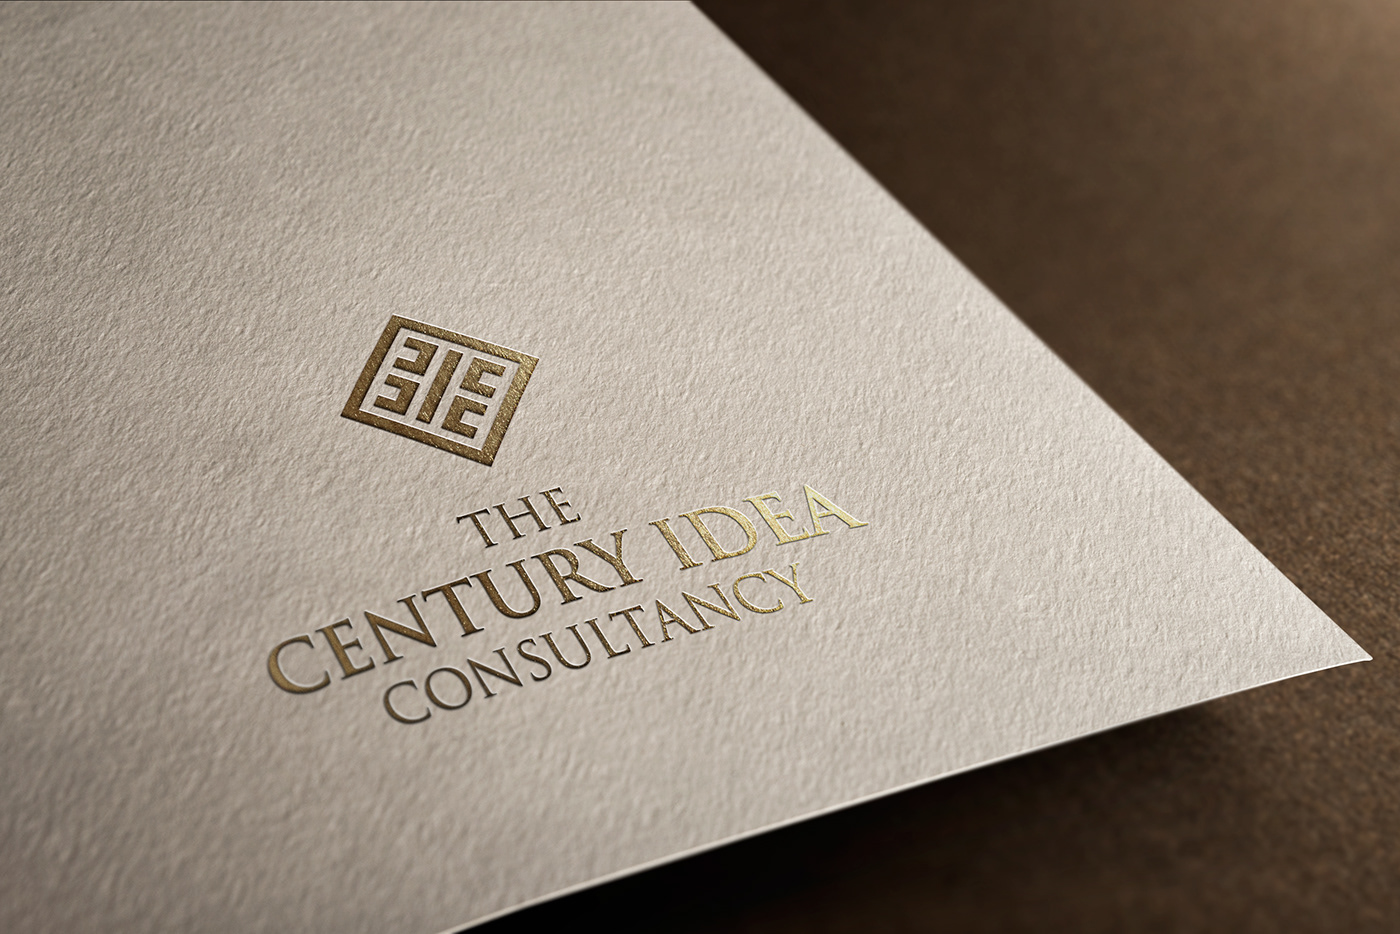 logo identity company consultancy Consulting visual brand graphic